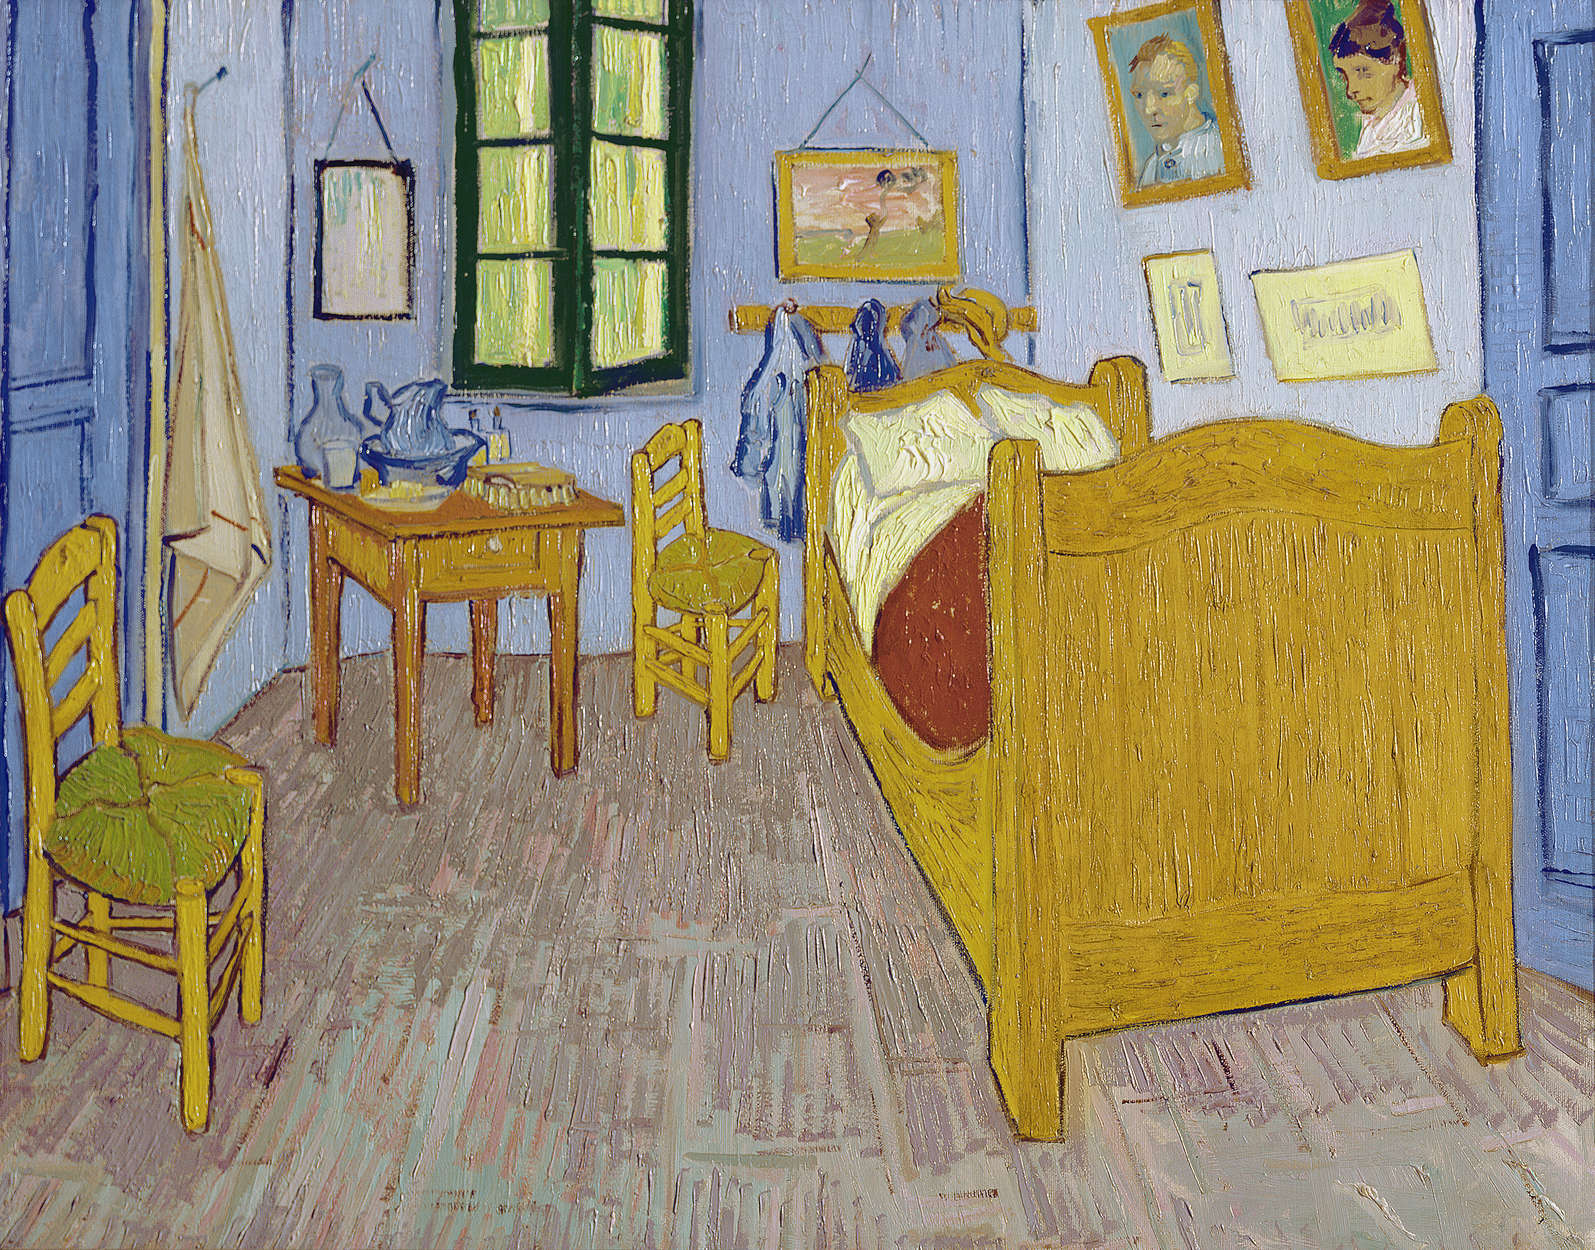             Mural de Vincent van Gogh "El dormitorio de Vincent en Arles"
        